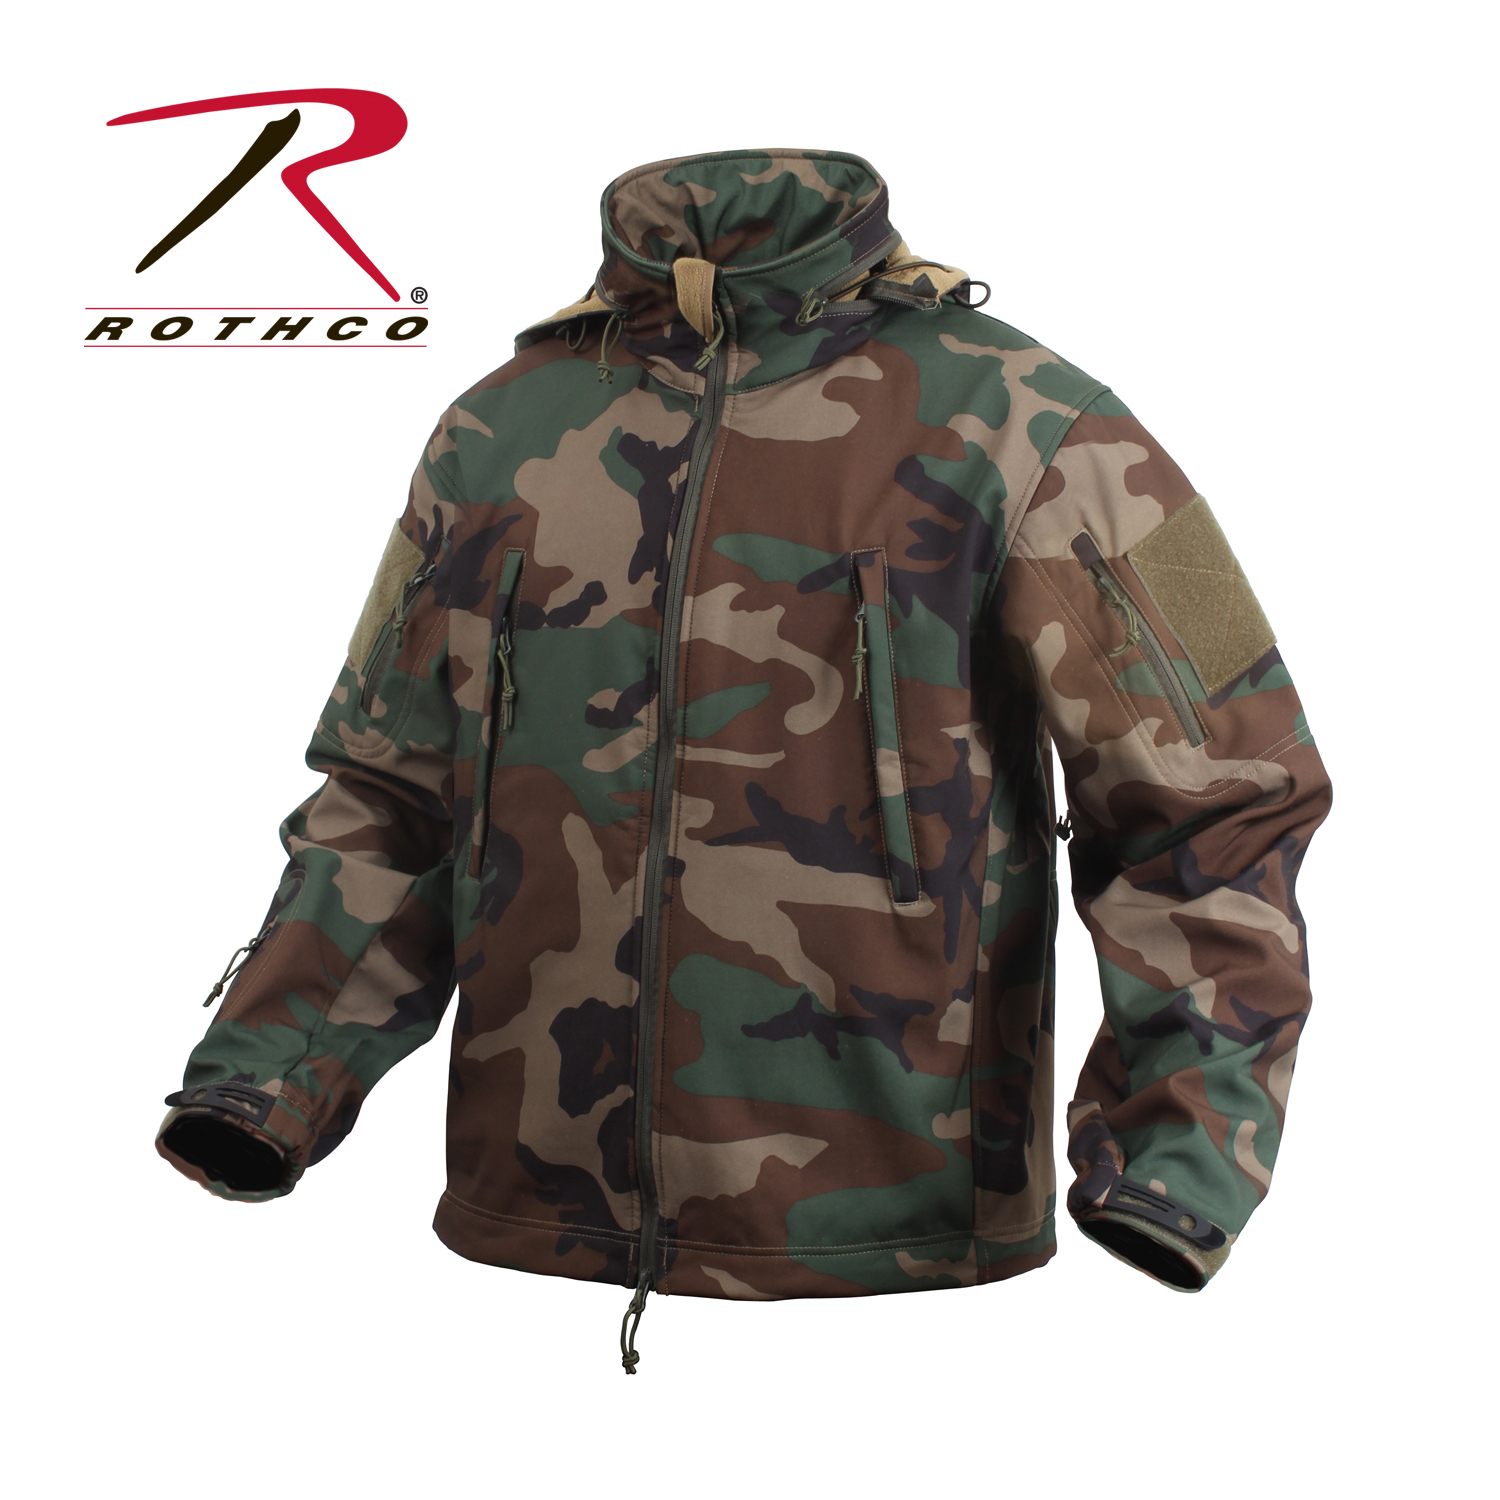 Rothco Special Ops Coats & Jackets